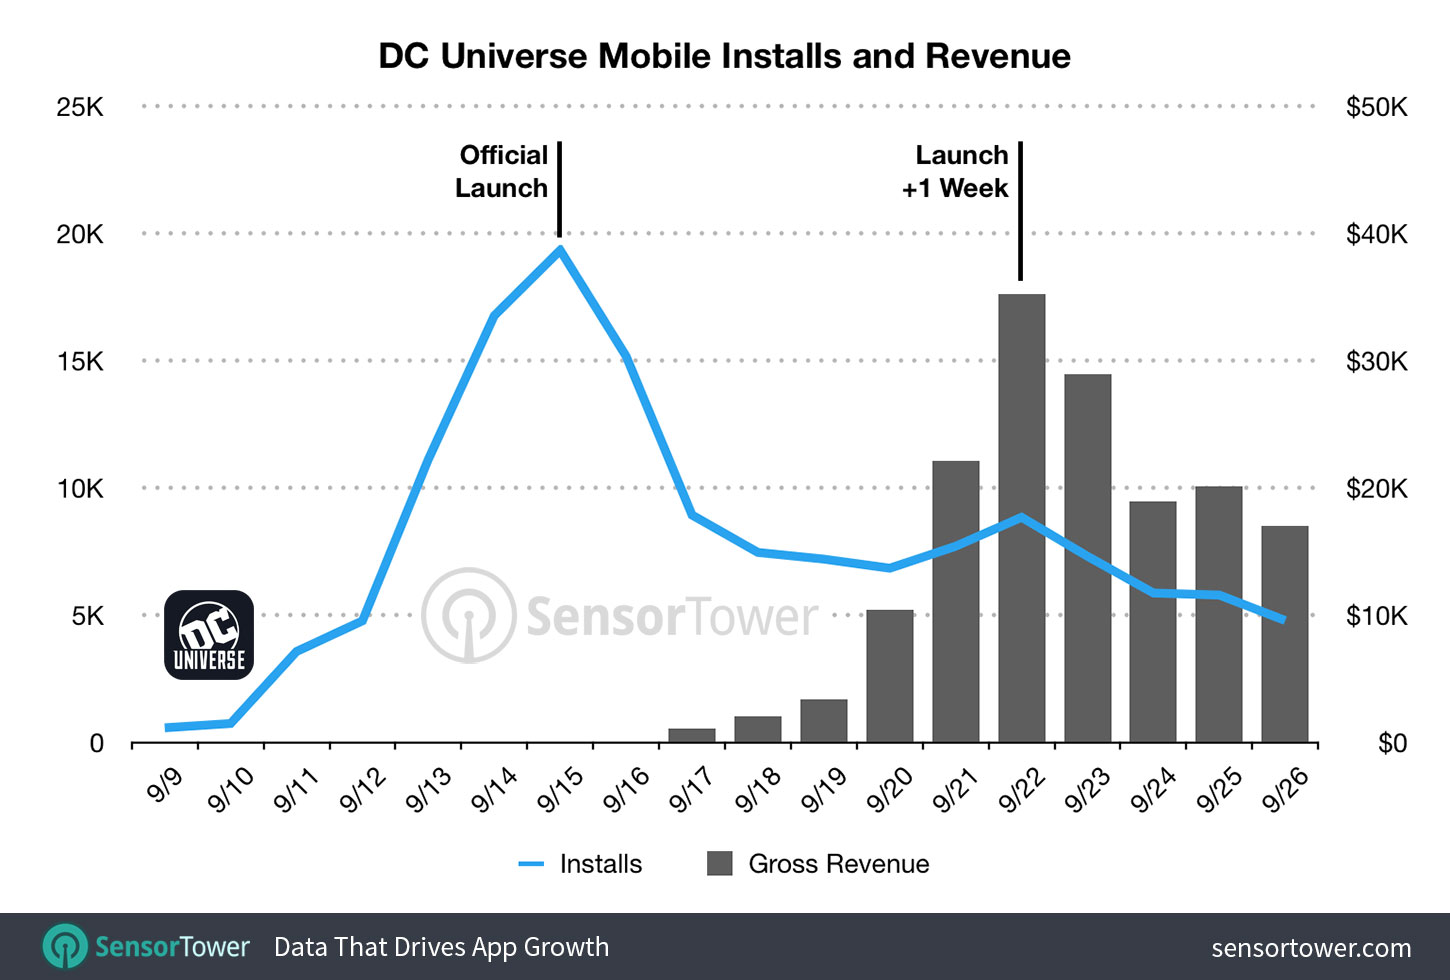 DC Universe Launch Downloads and Revenue